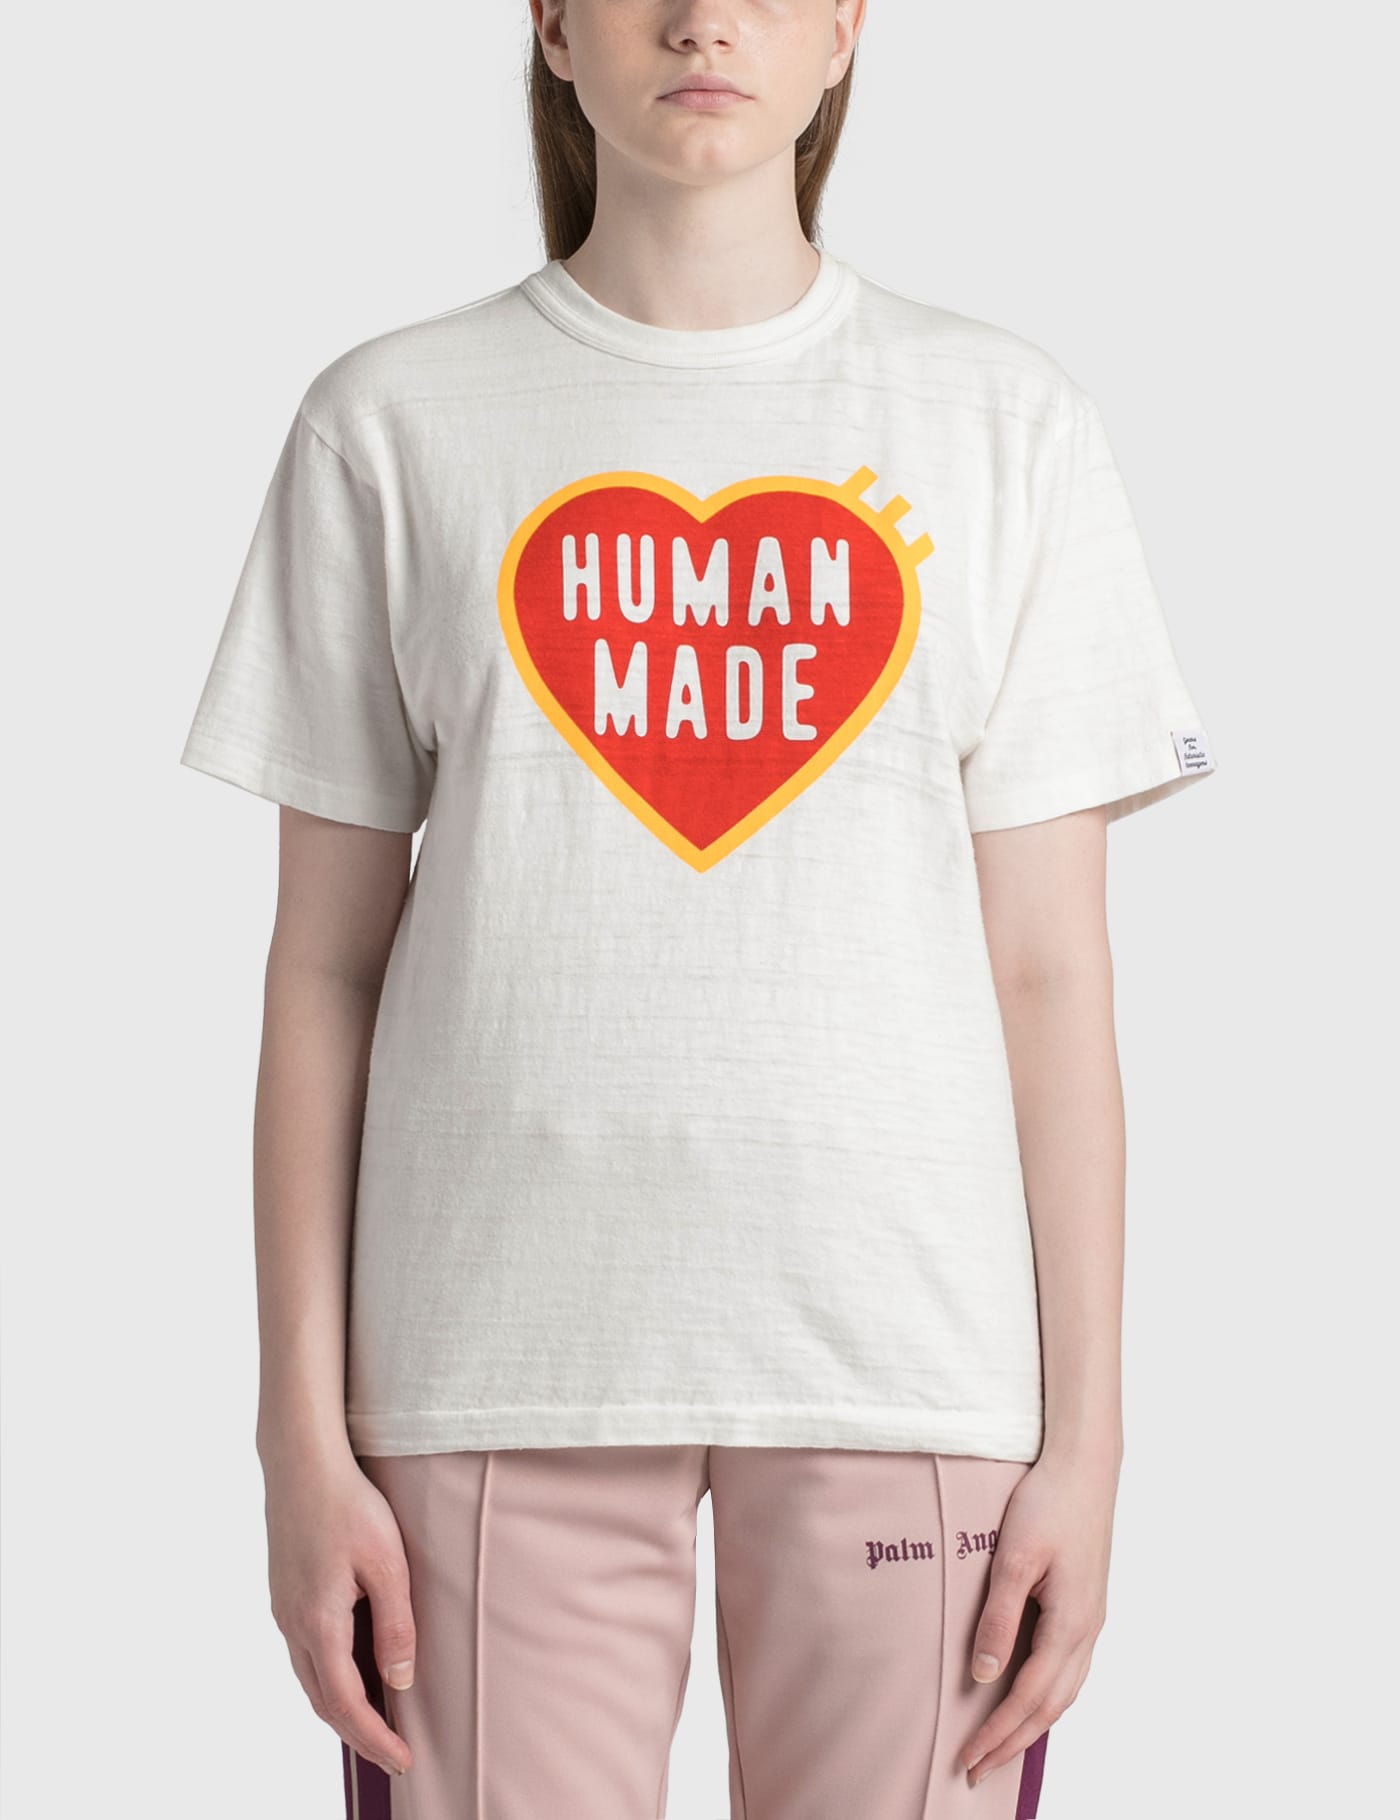 Human Made - Heart Logo T-shirt | HBX - Globally Curated Fashion